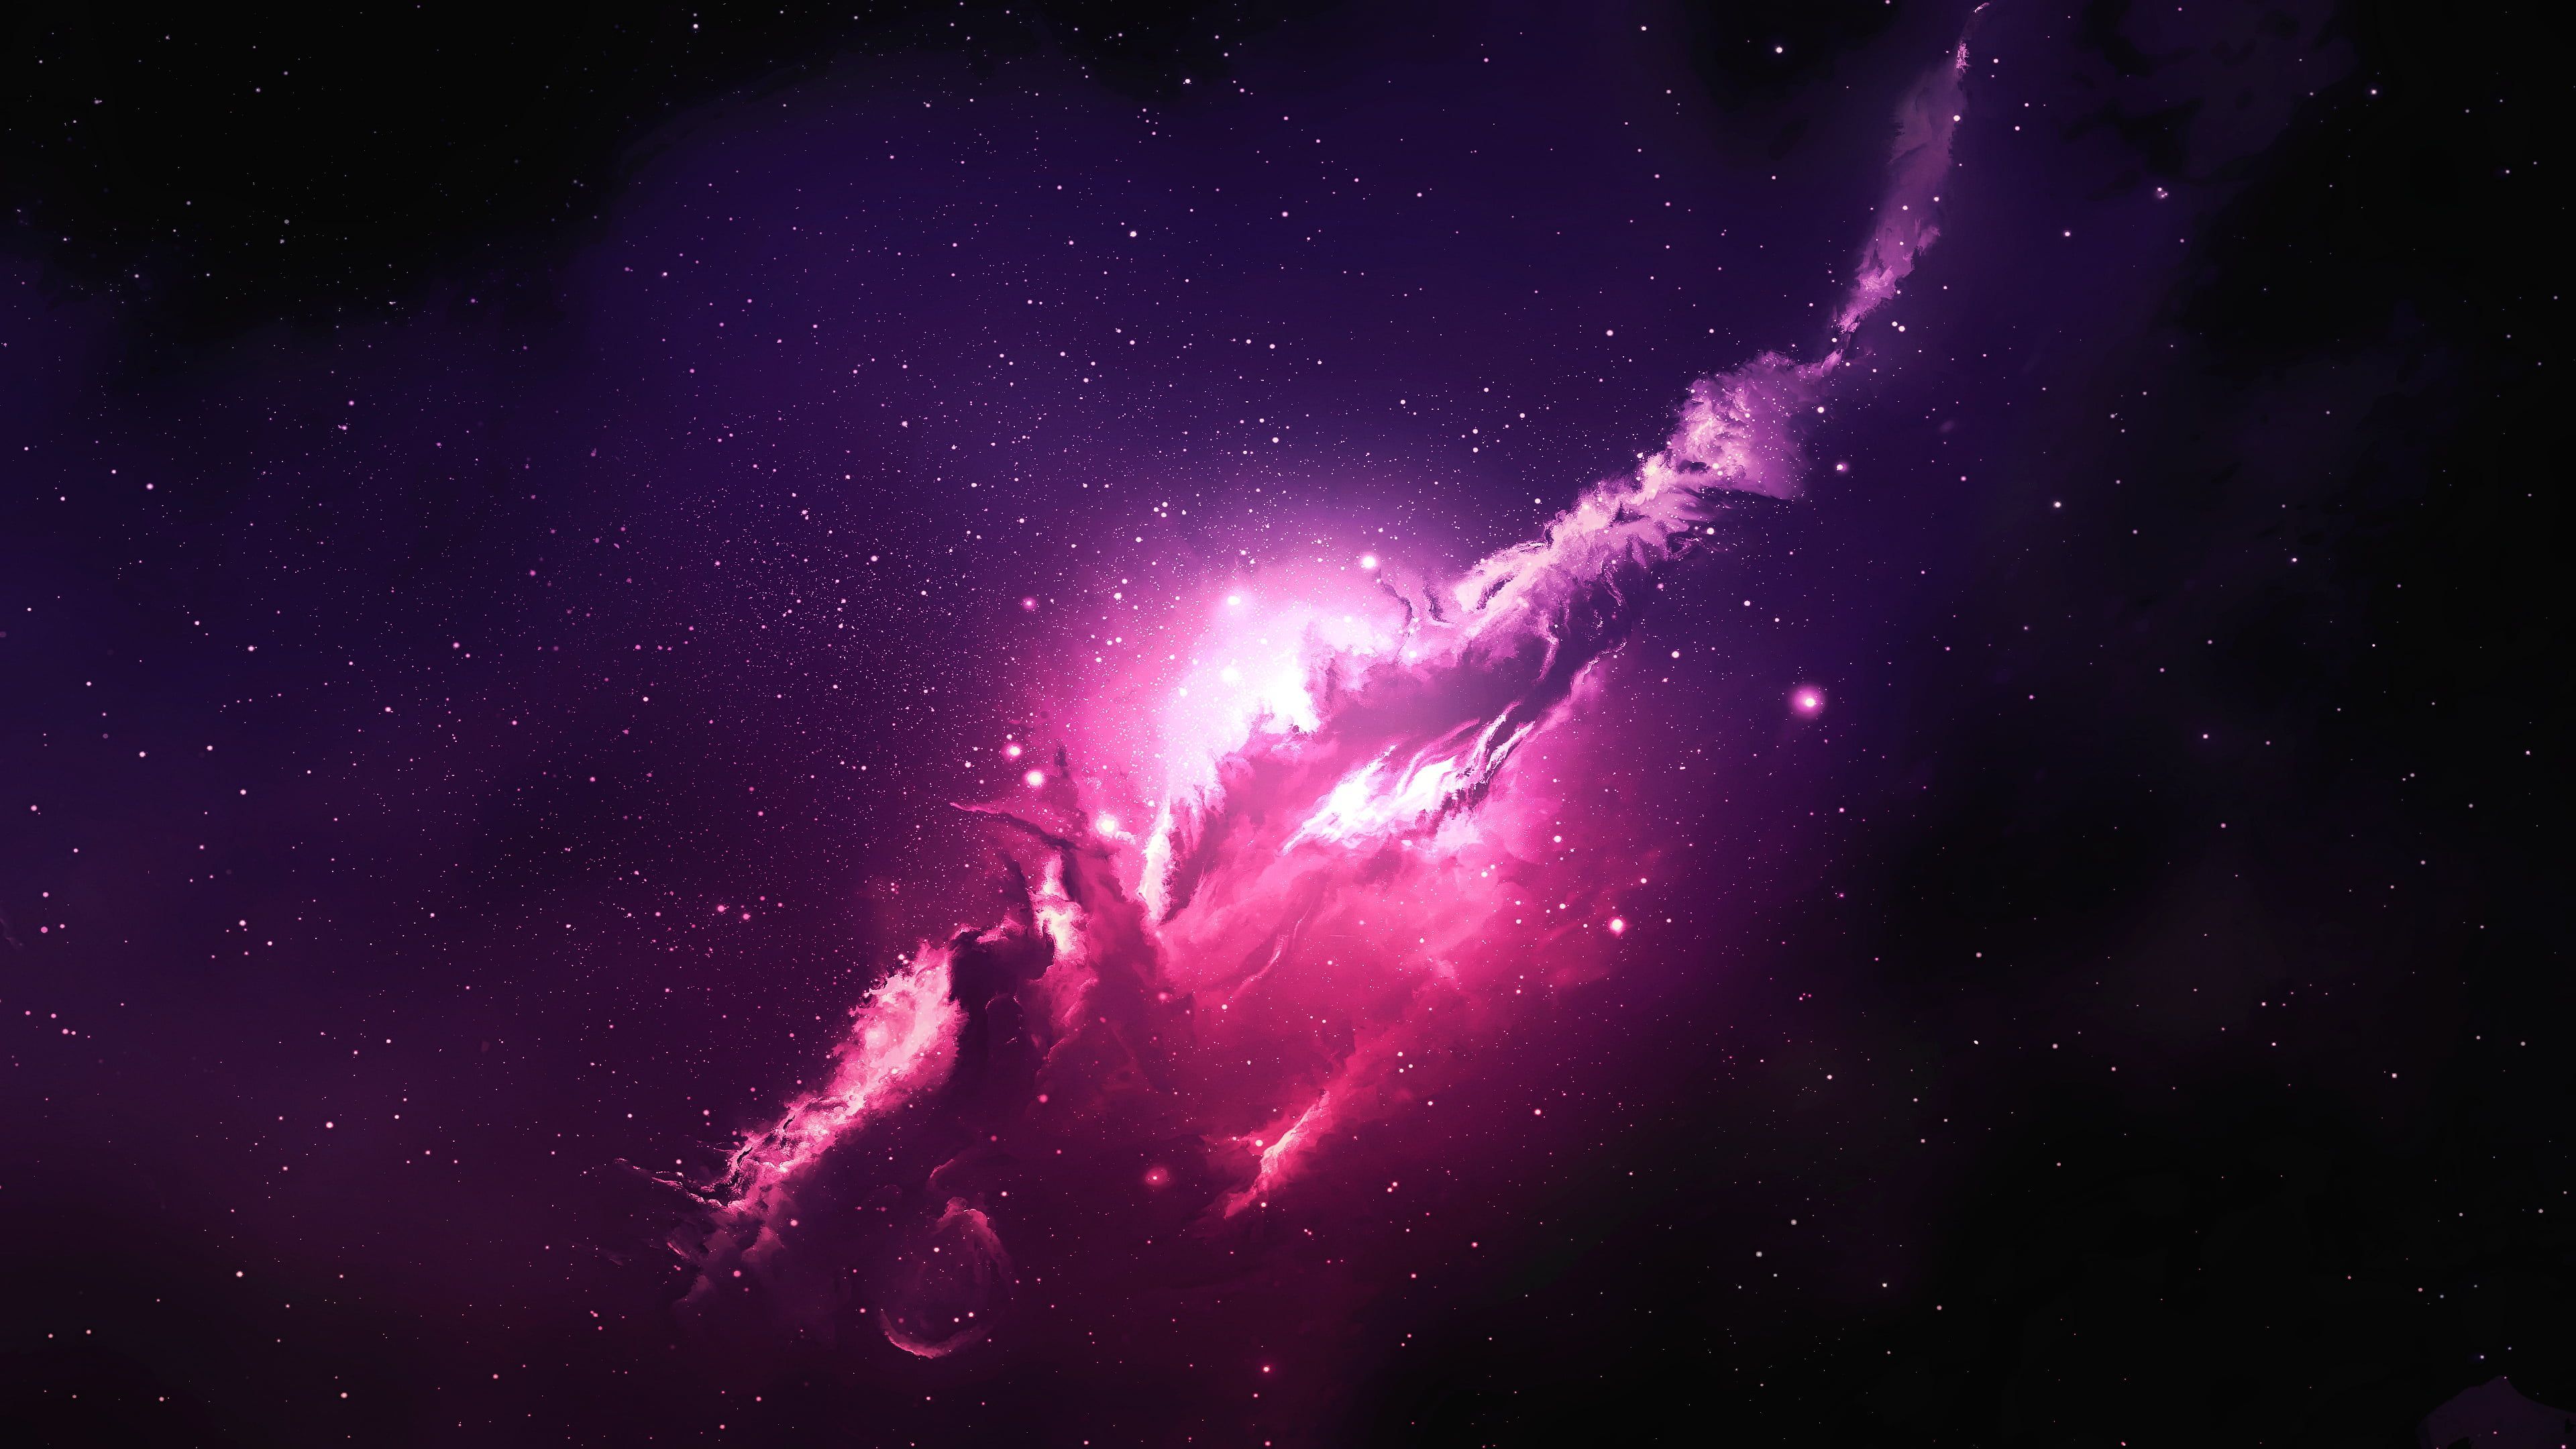 galaxy wallpaper #nebula #Atlantis #galaxy #space #stars #universe #spacescapes #violet #pink K #wallpaper #hdwallpap. Nebula wallpaper, Wallpaper space, Nebula